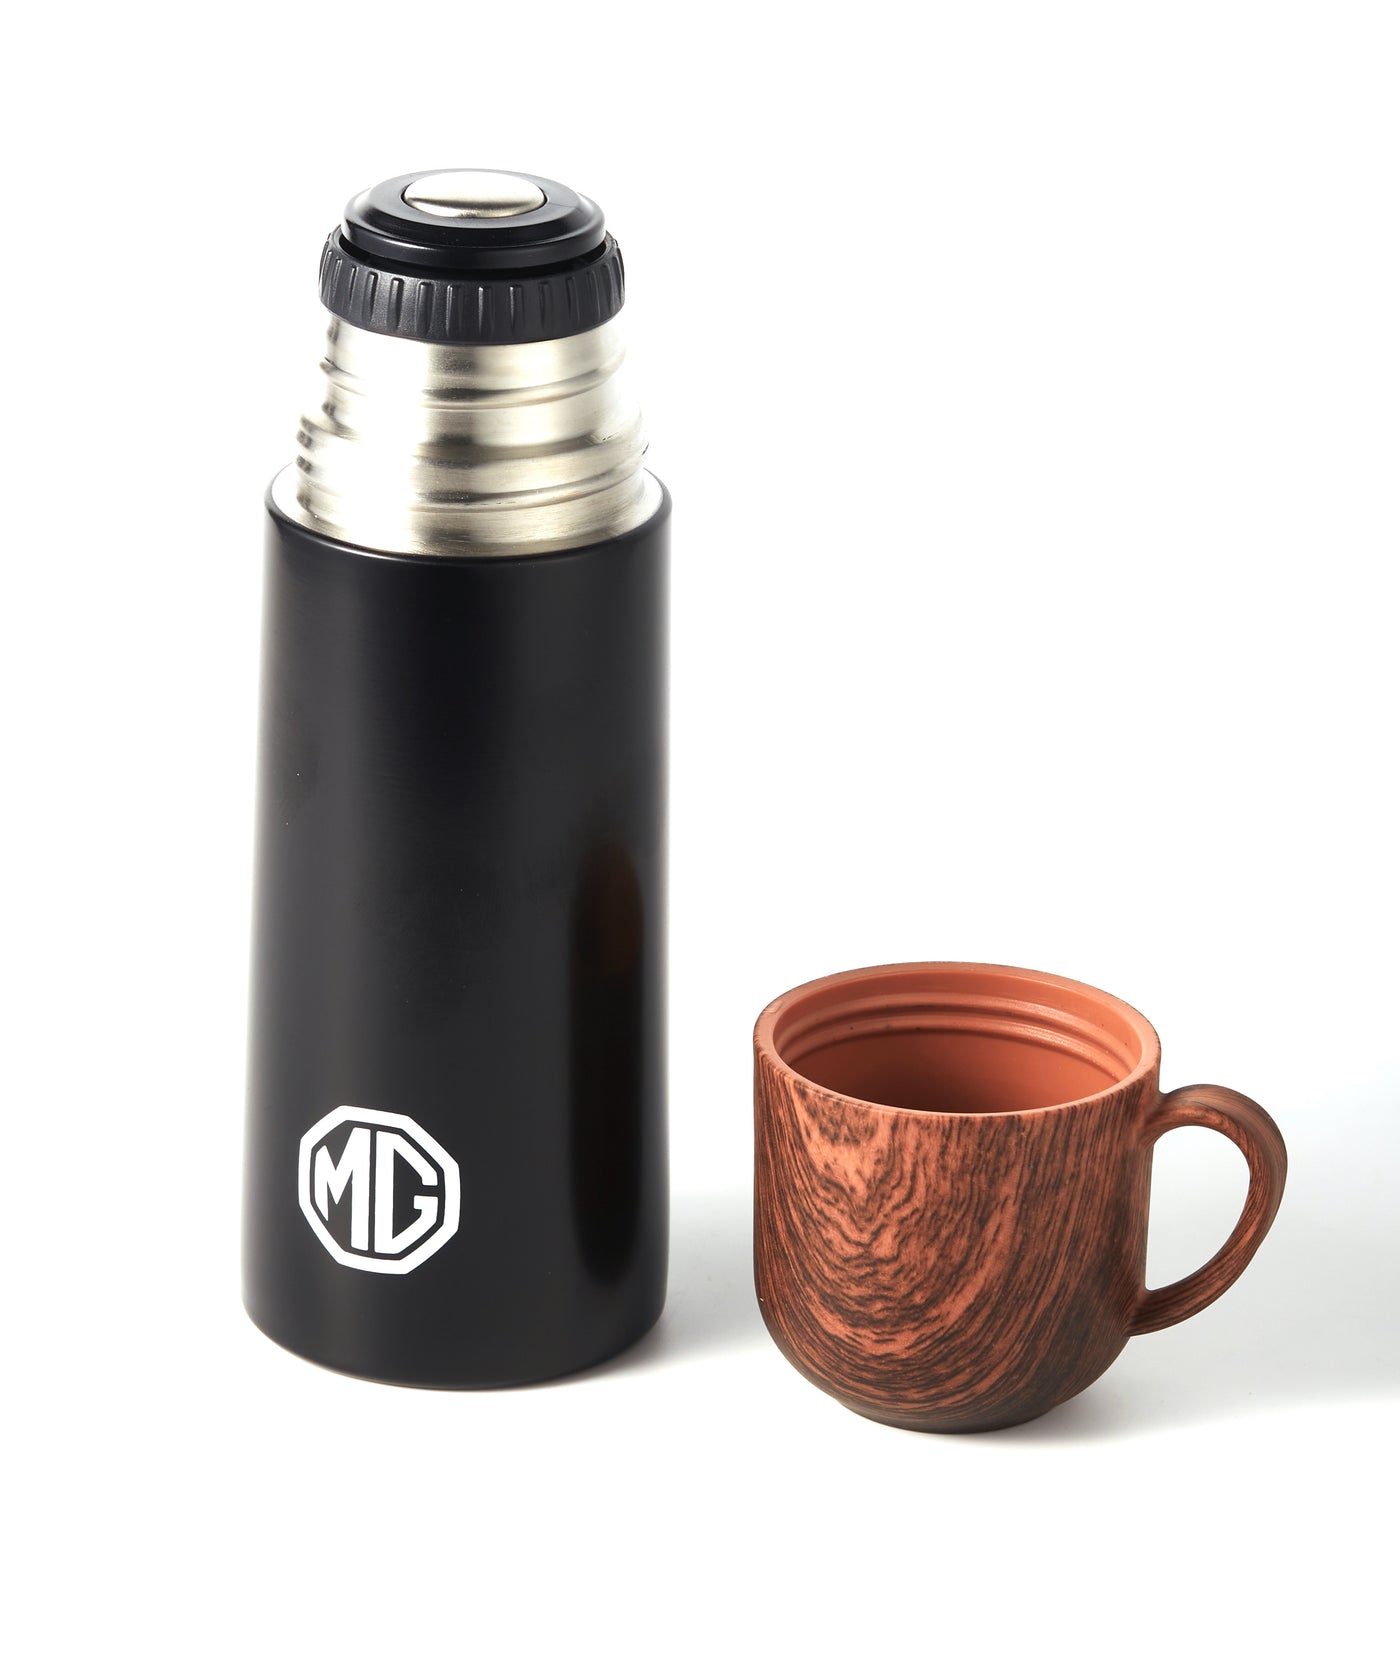 MG Thermal Flask 350ml